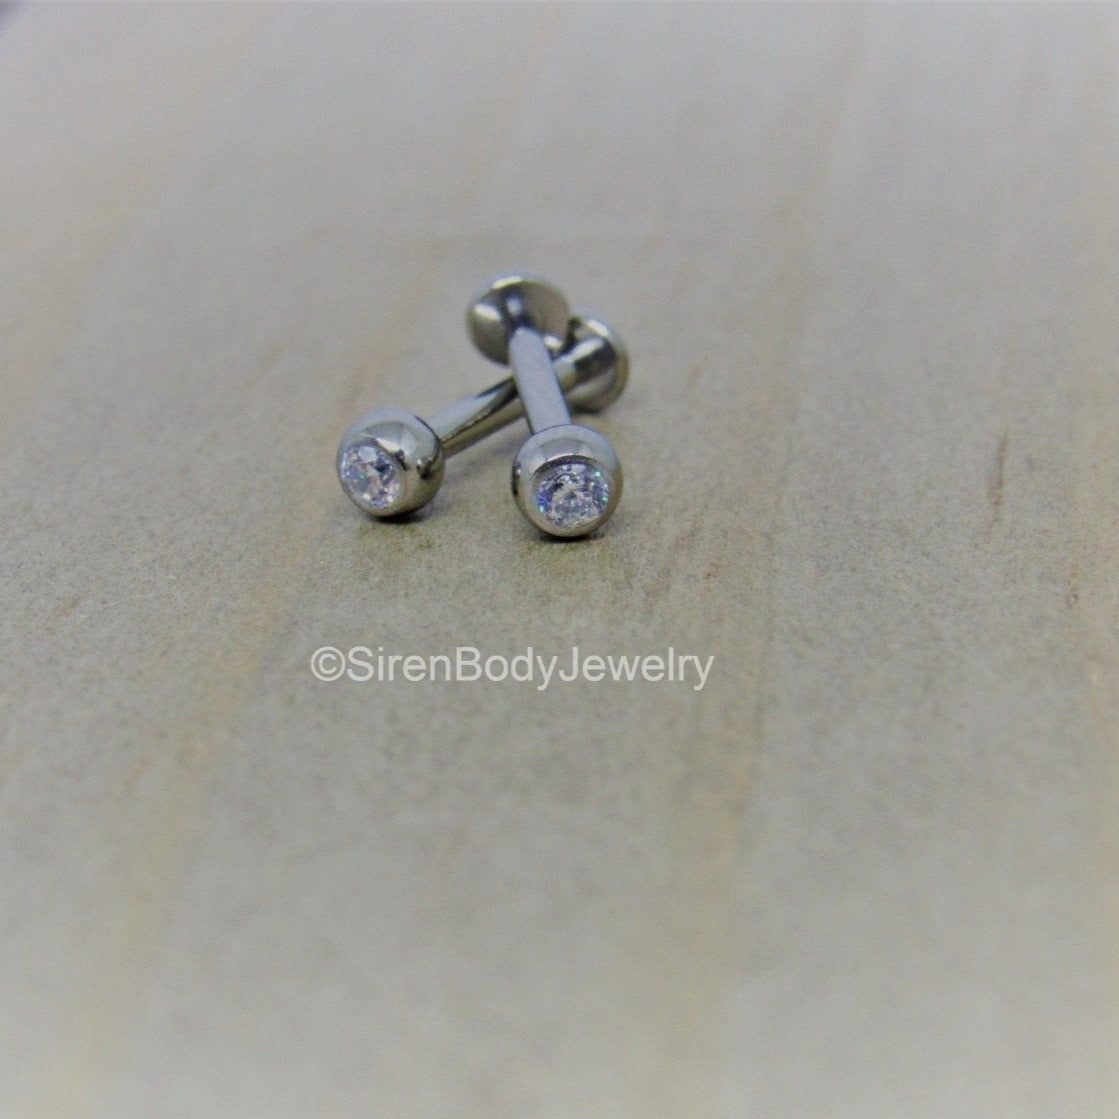 16g titanium flat back labret earring stud set high polish silver gemstone beads